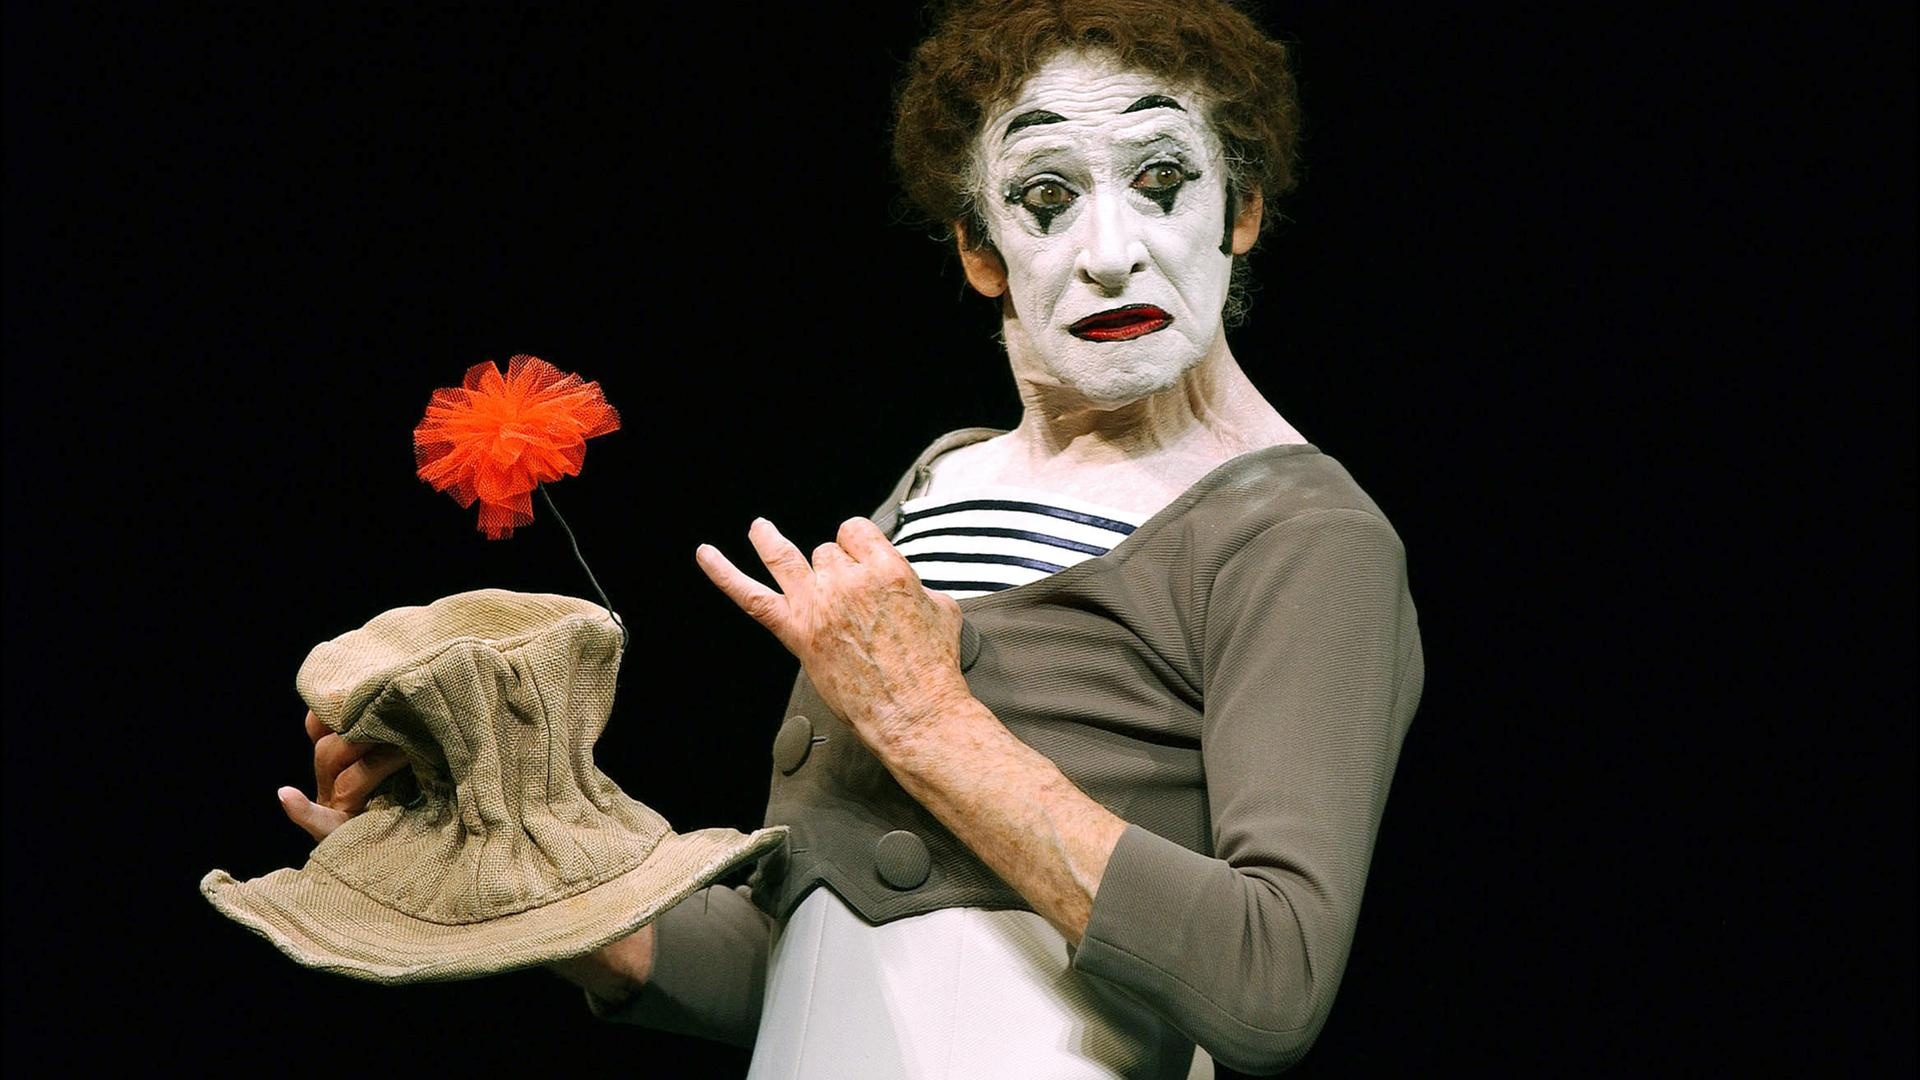 Marcel Marceau: Established his own school Ecole Internationale de Mimodrame de Paris in 1978, Bip the Clown. 1920x1080 Full HD Background.